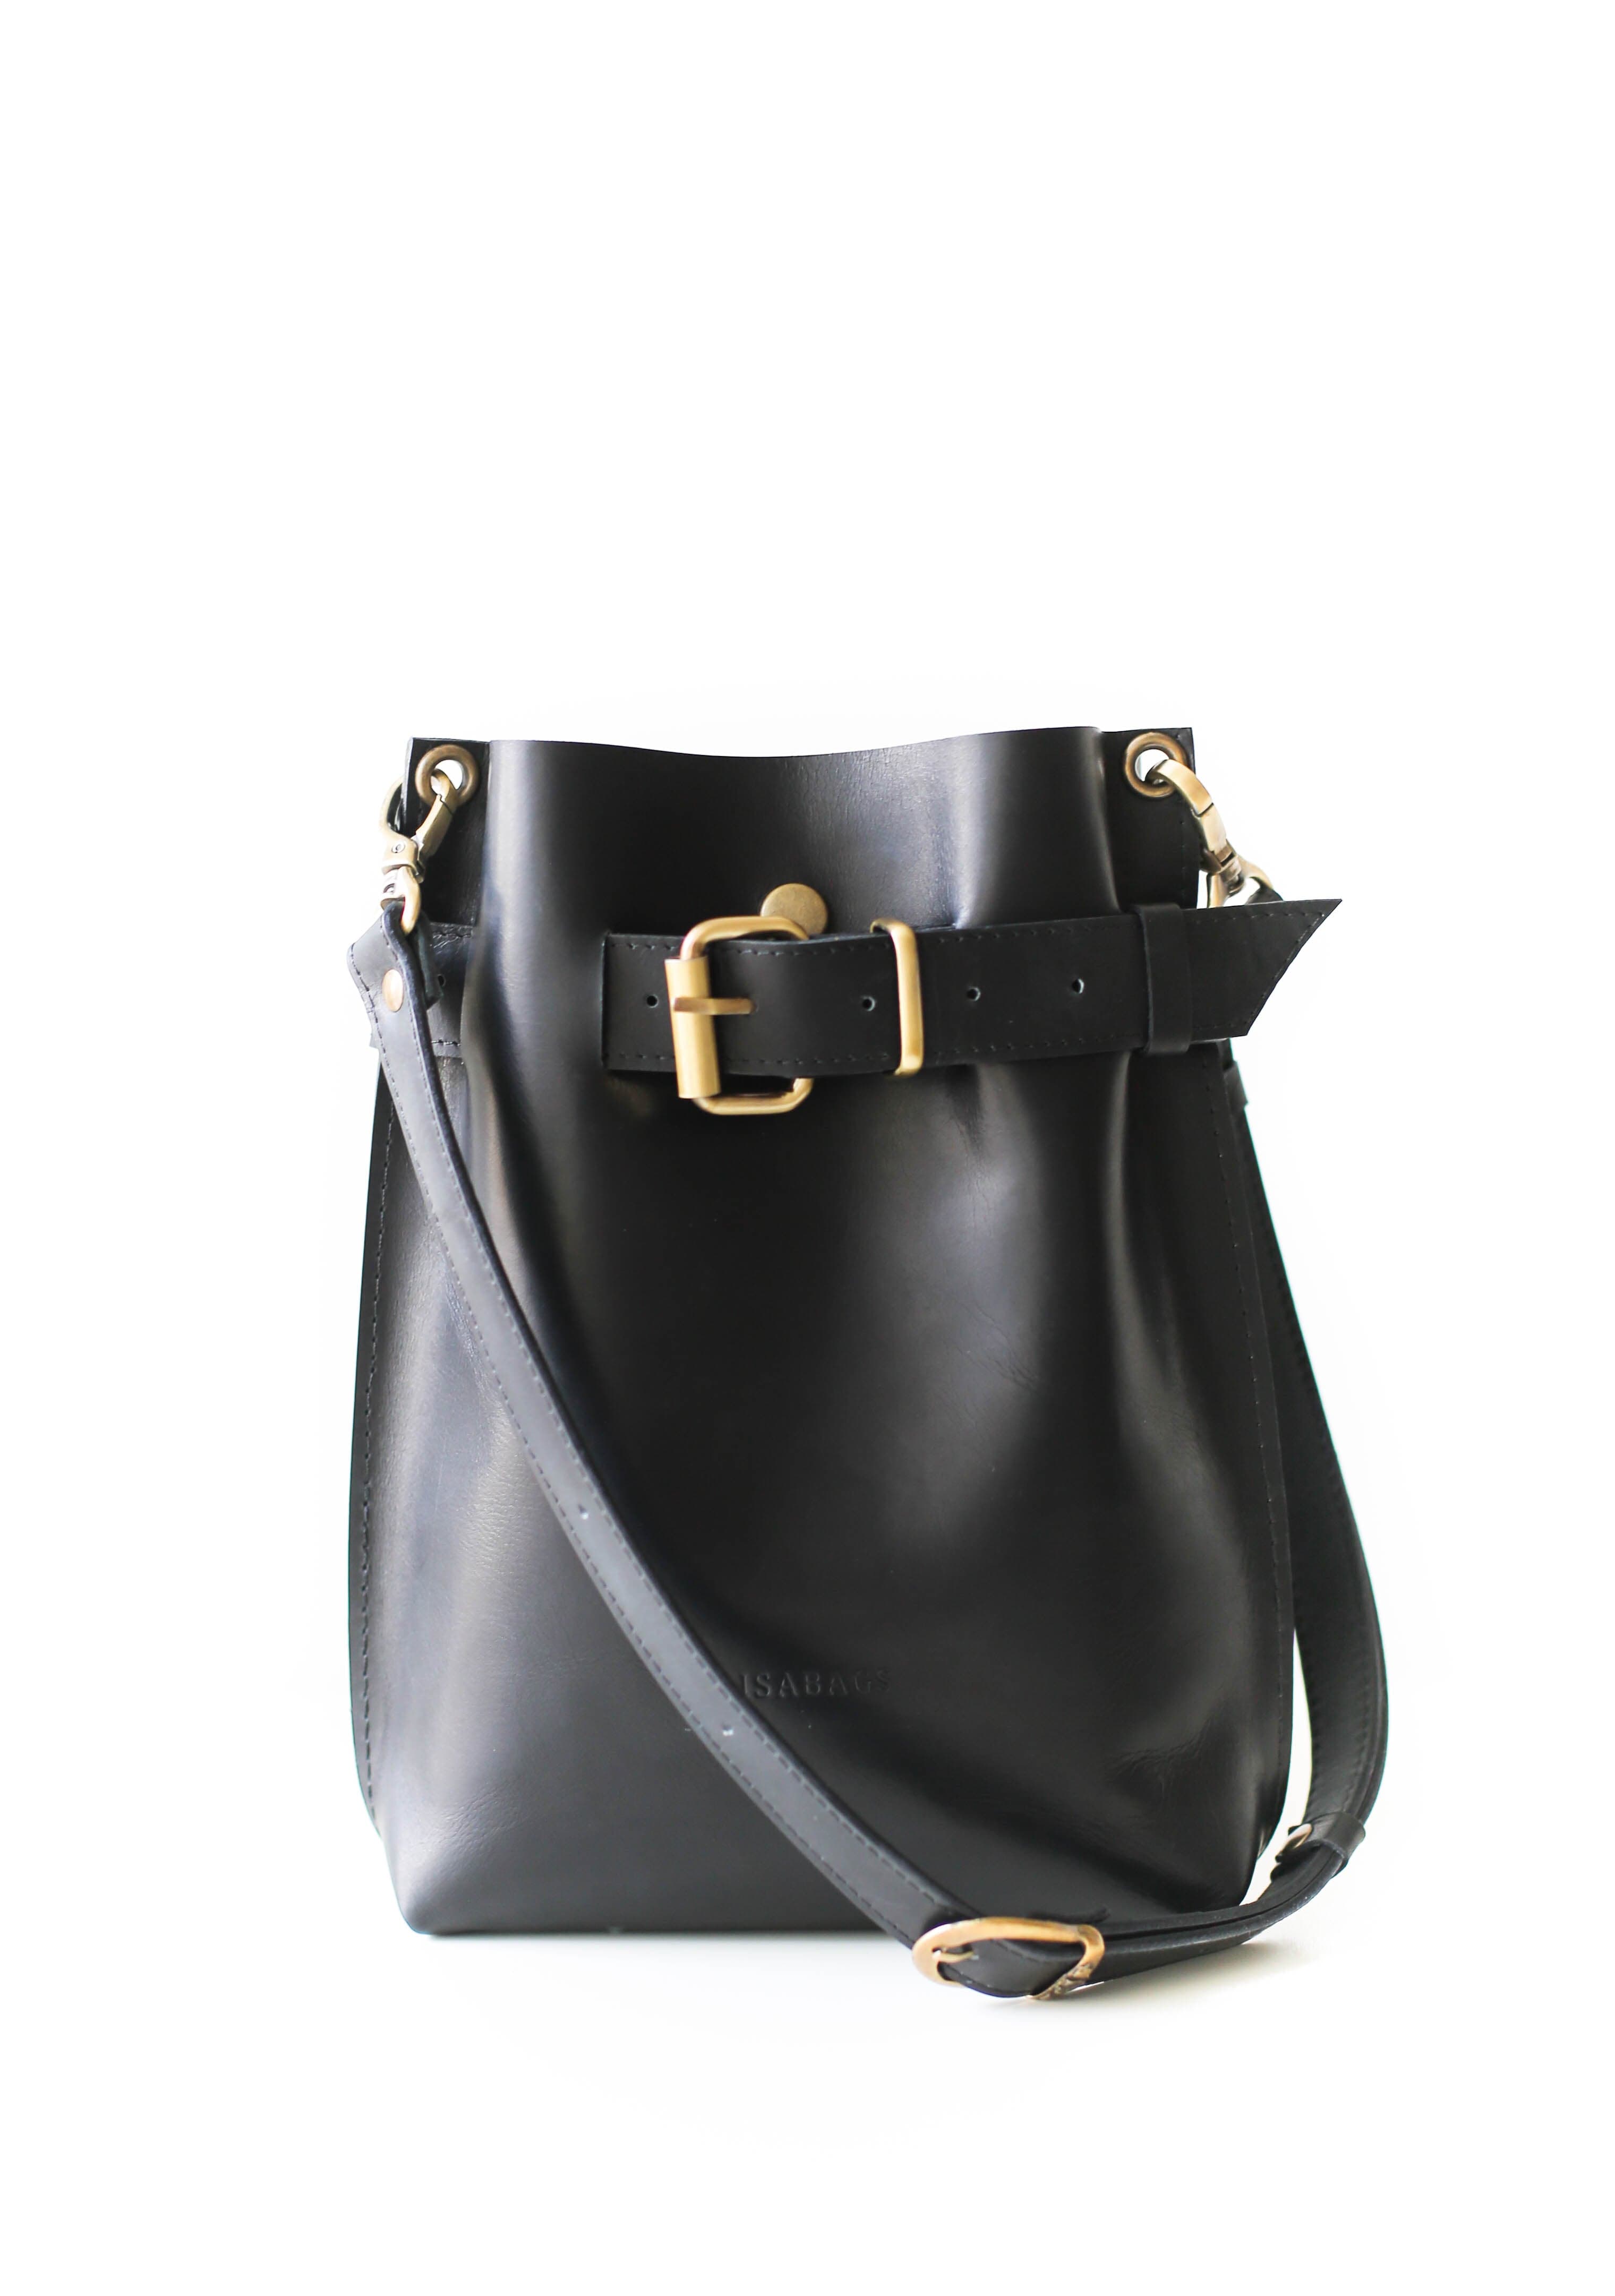 Small Cross Body Bag for Girls PU Leather Shoulder Handbag Cross Body Purse  for Teens Girls(Black) - Walmart.com